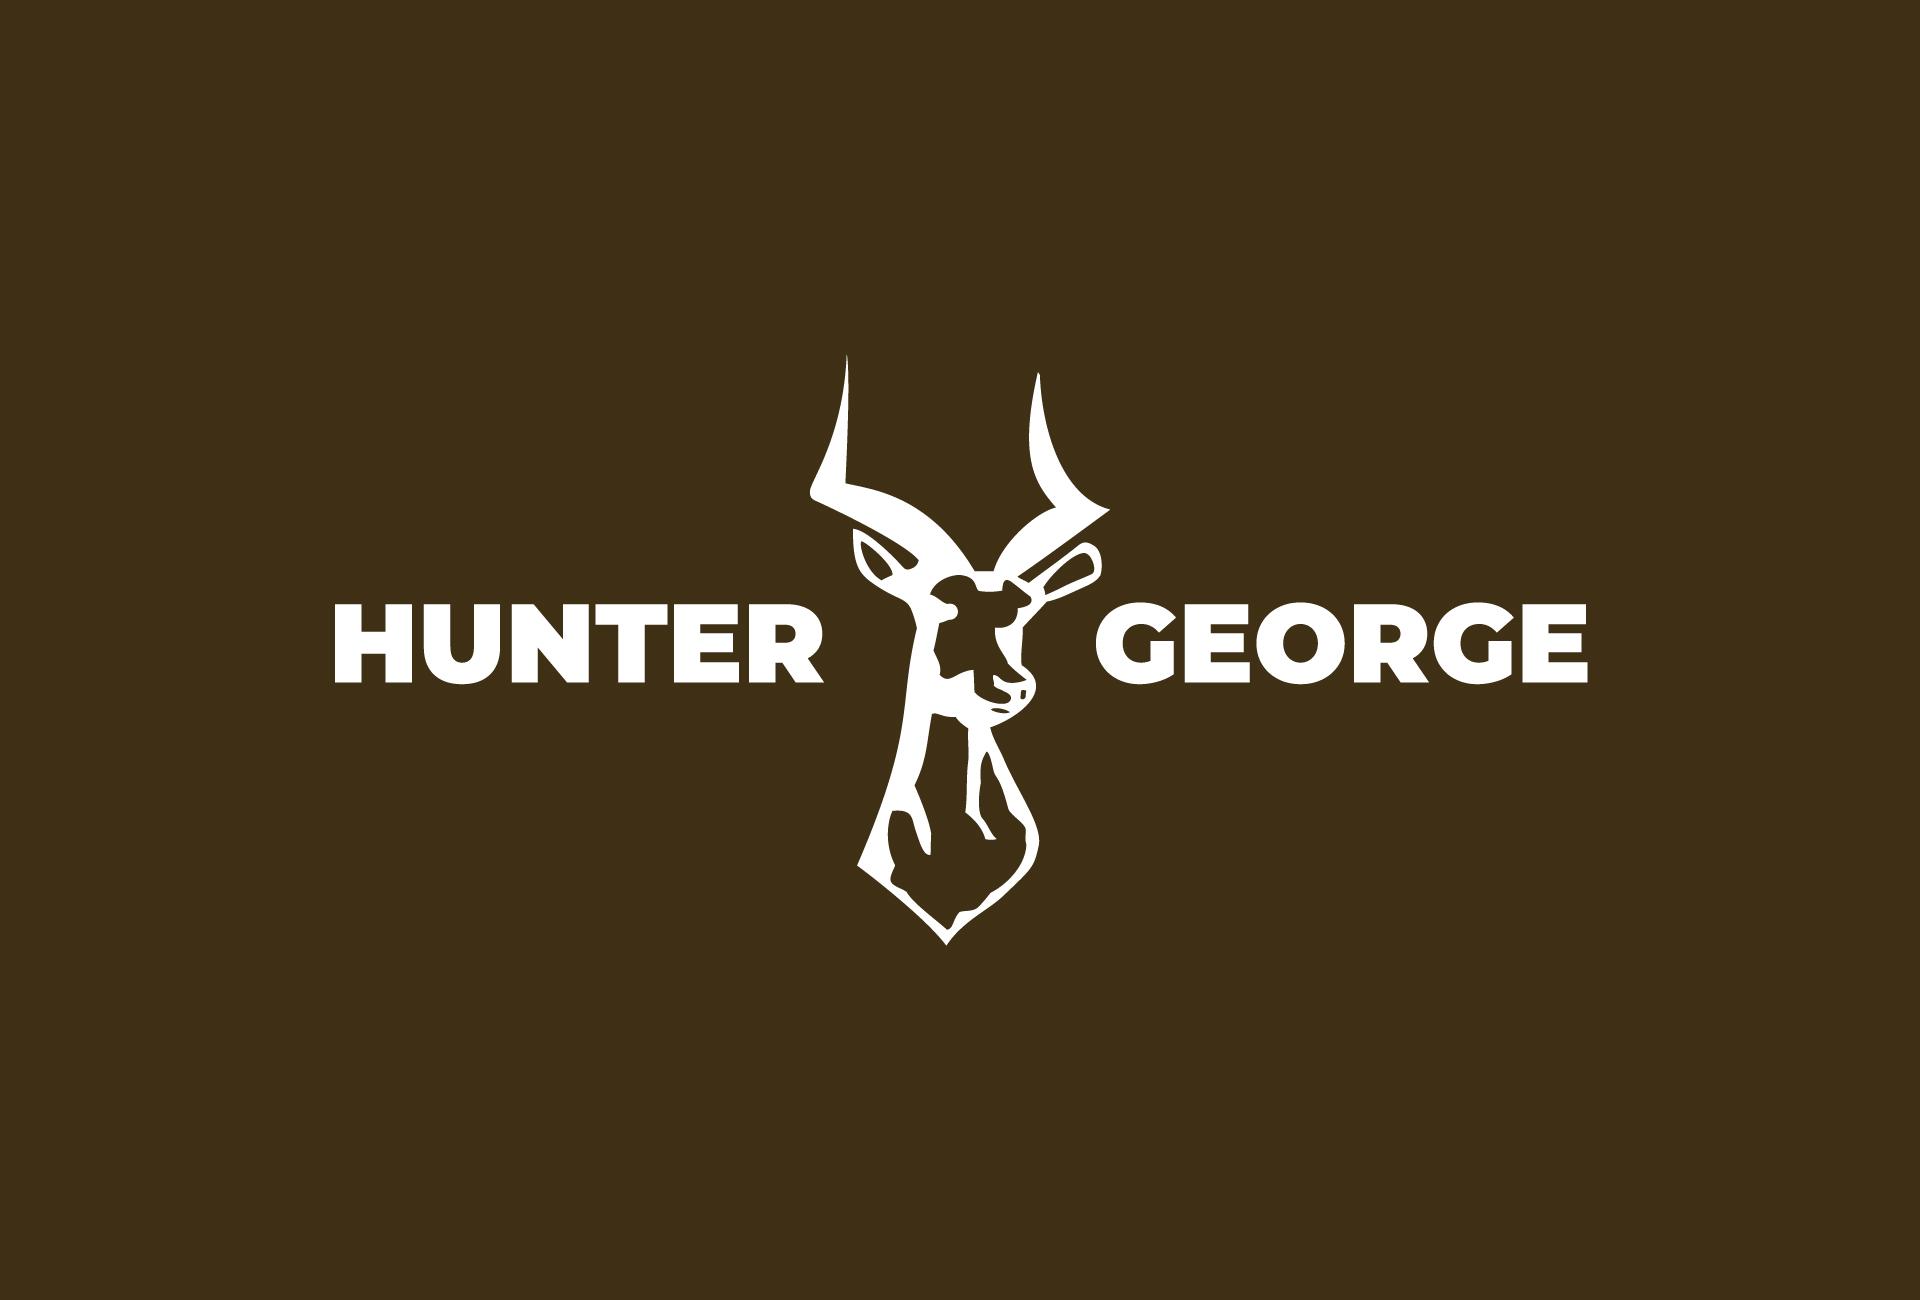 Lesen Sie mehr über den Artikel Hunter George на изложение в Дортмунд